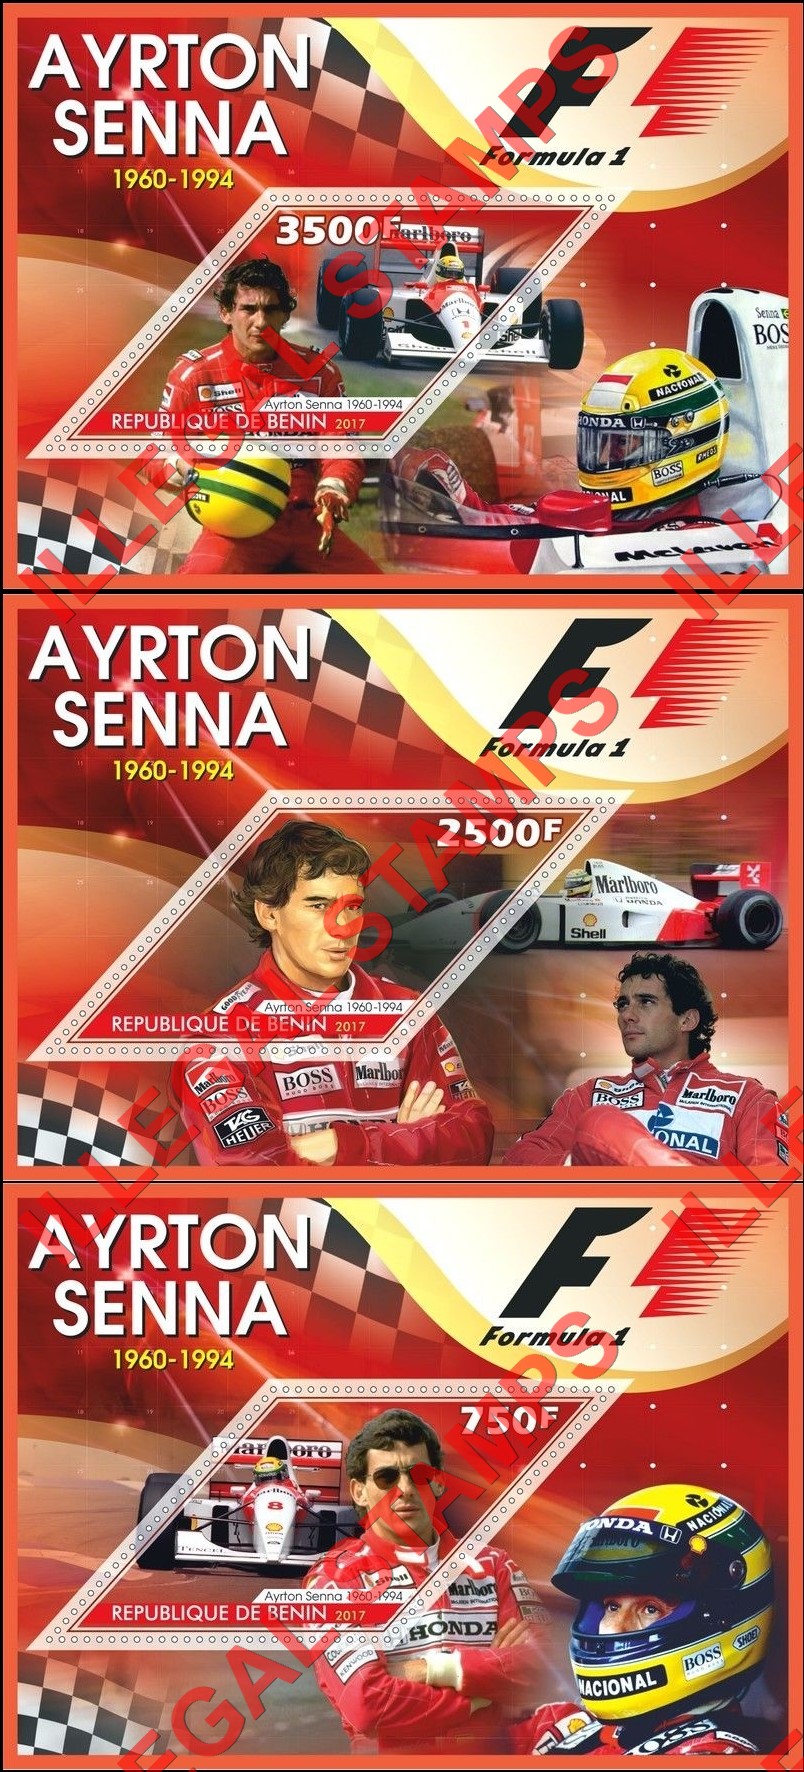 Benin 2017 Formula I Ayrton Senna Illegal Stamp Souvenir Sheets of 1 (Part 1)